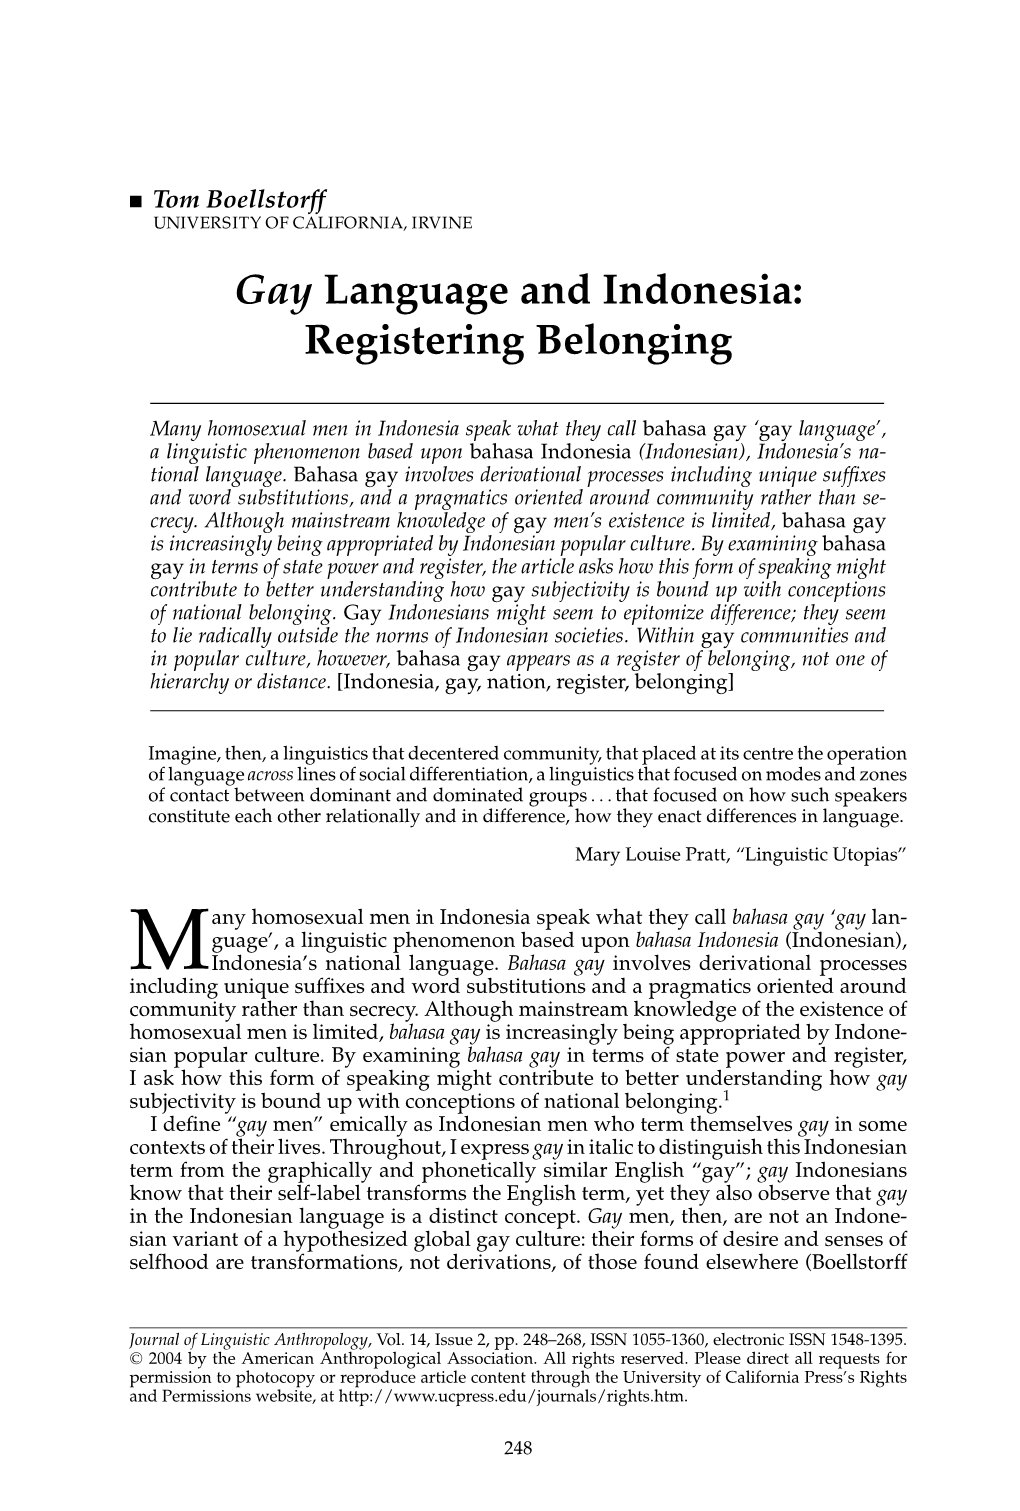 Gay Language and Indonesia: Registering Belonging